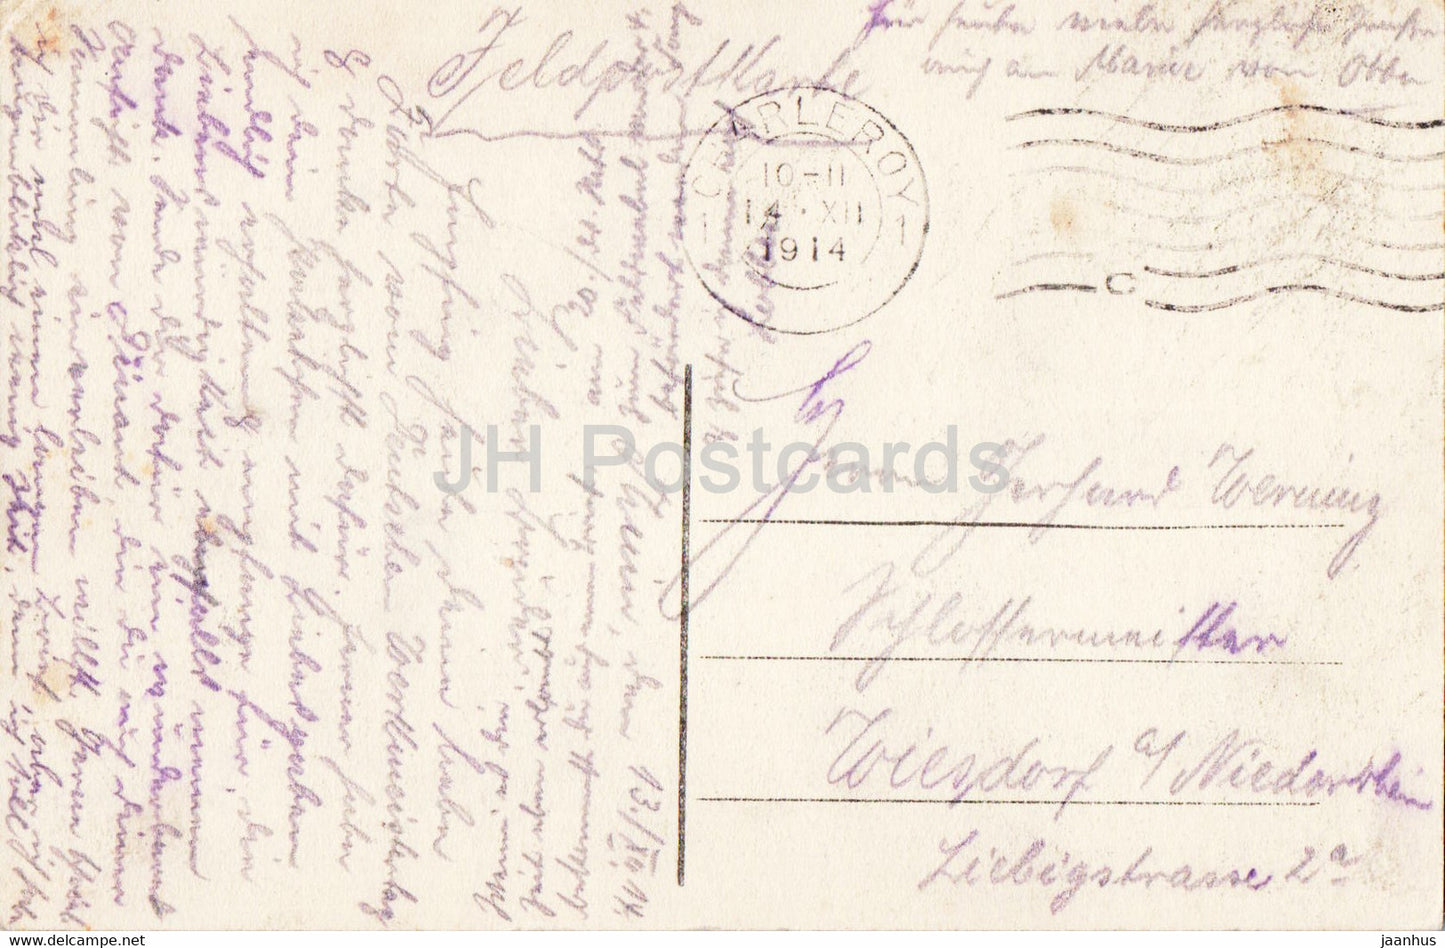 Dinant - Panorama - 9 - carte postale ancienne - 1914 - Belgique - occasion